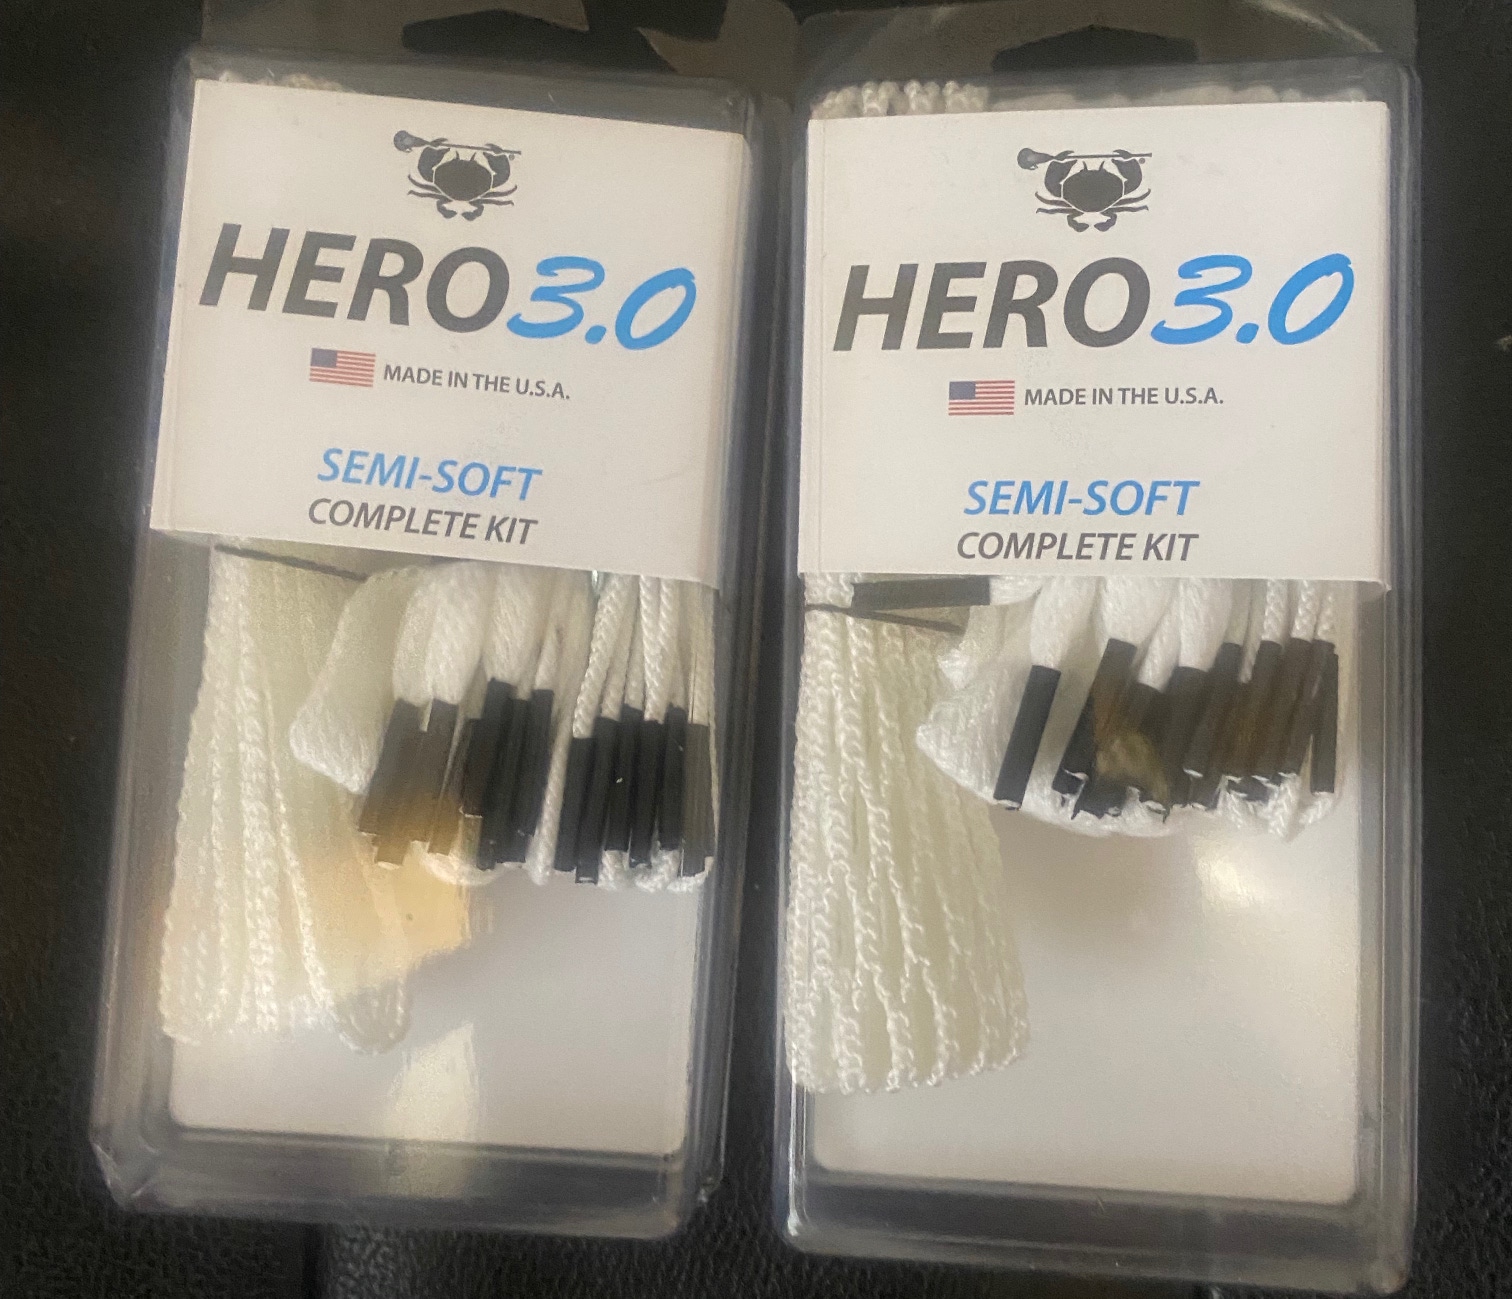 2 New ECD Hero 3.0 Complete Mesh Kits, semi soft